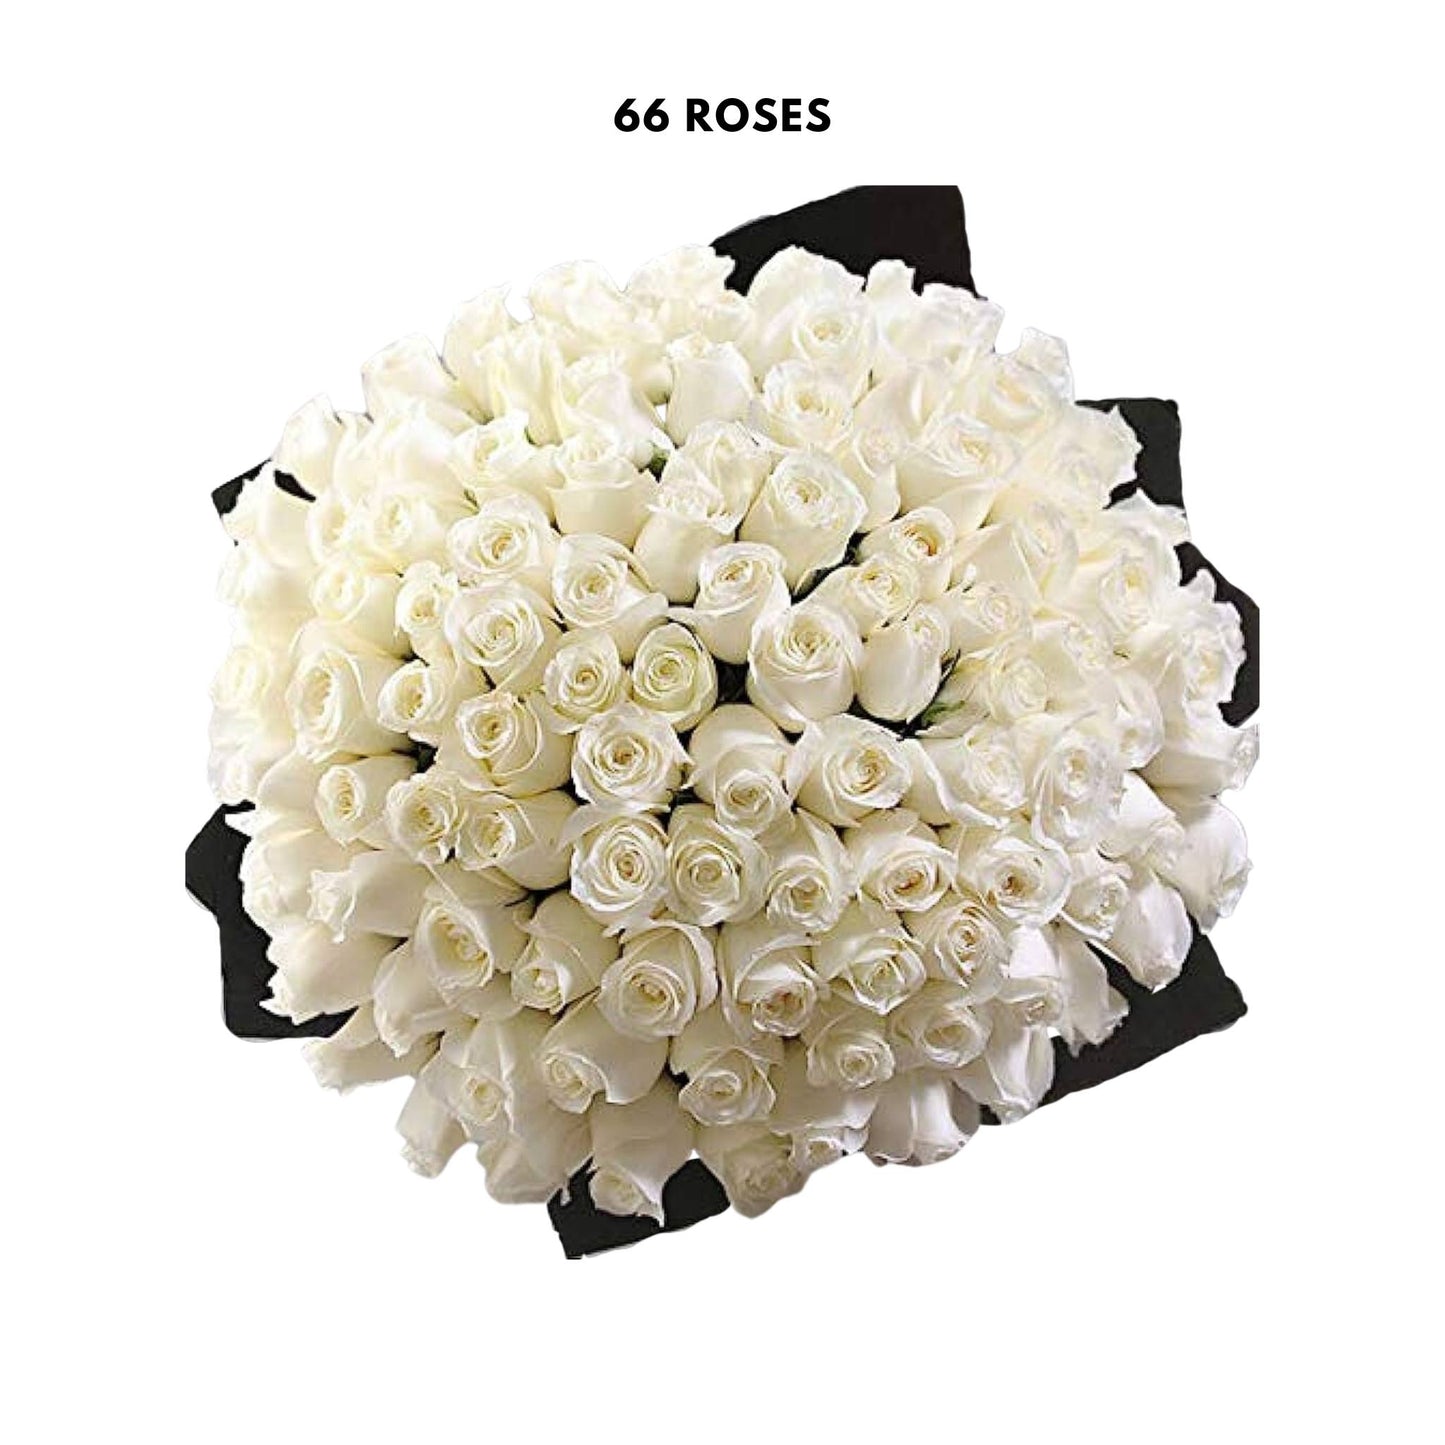 Luxury Jumbo 33, 66, or 99 Rose Bouquet